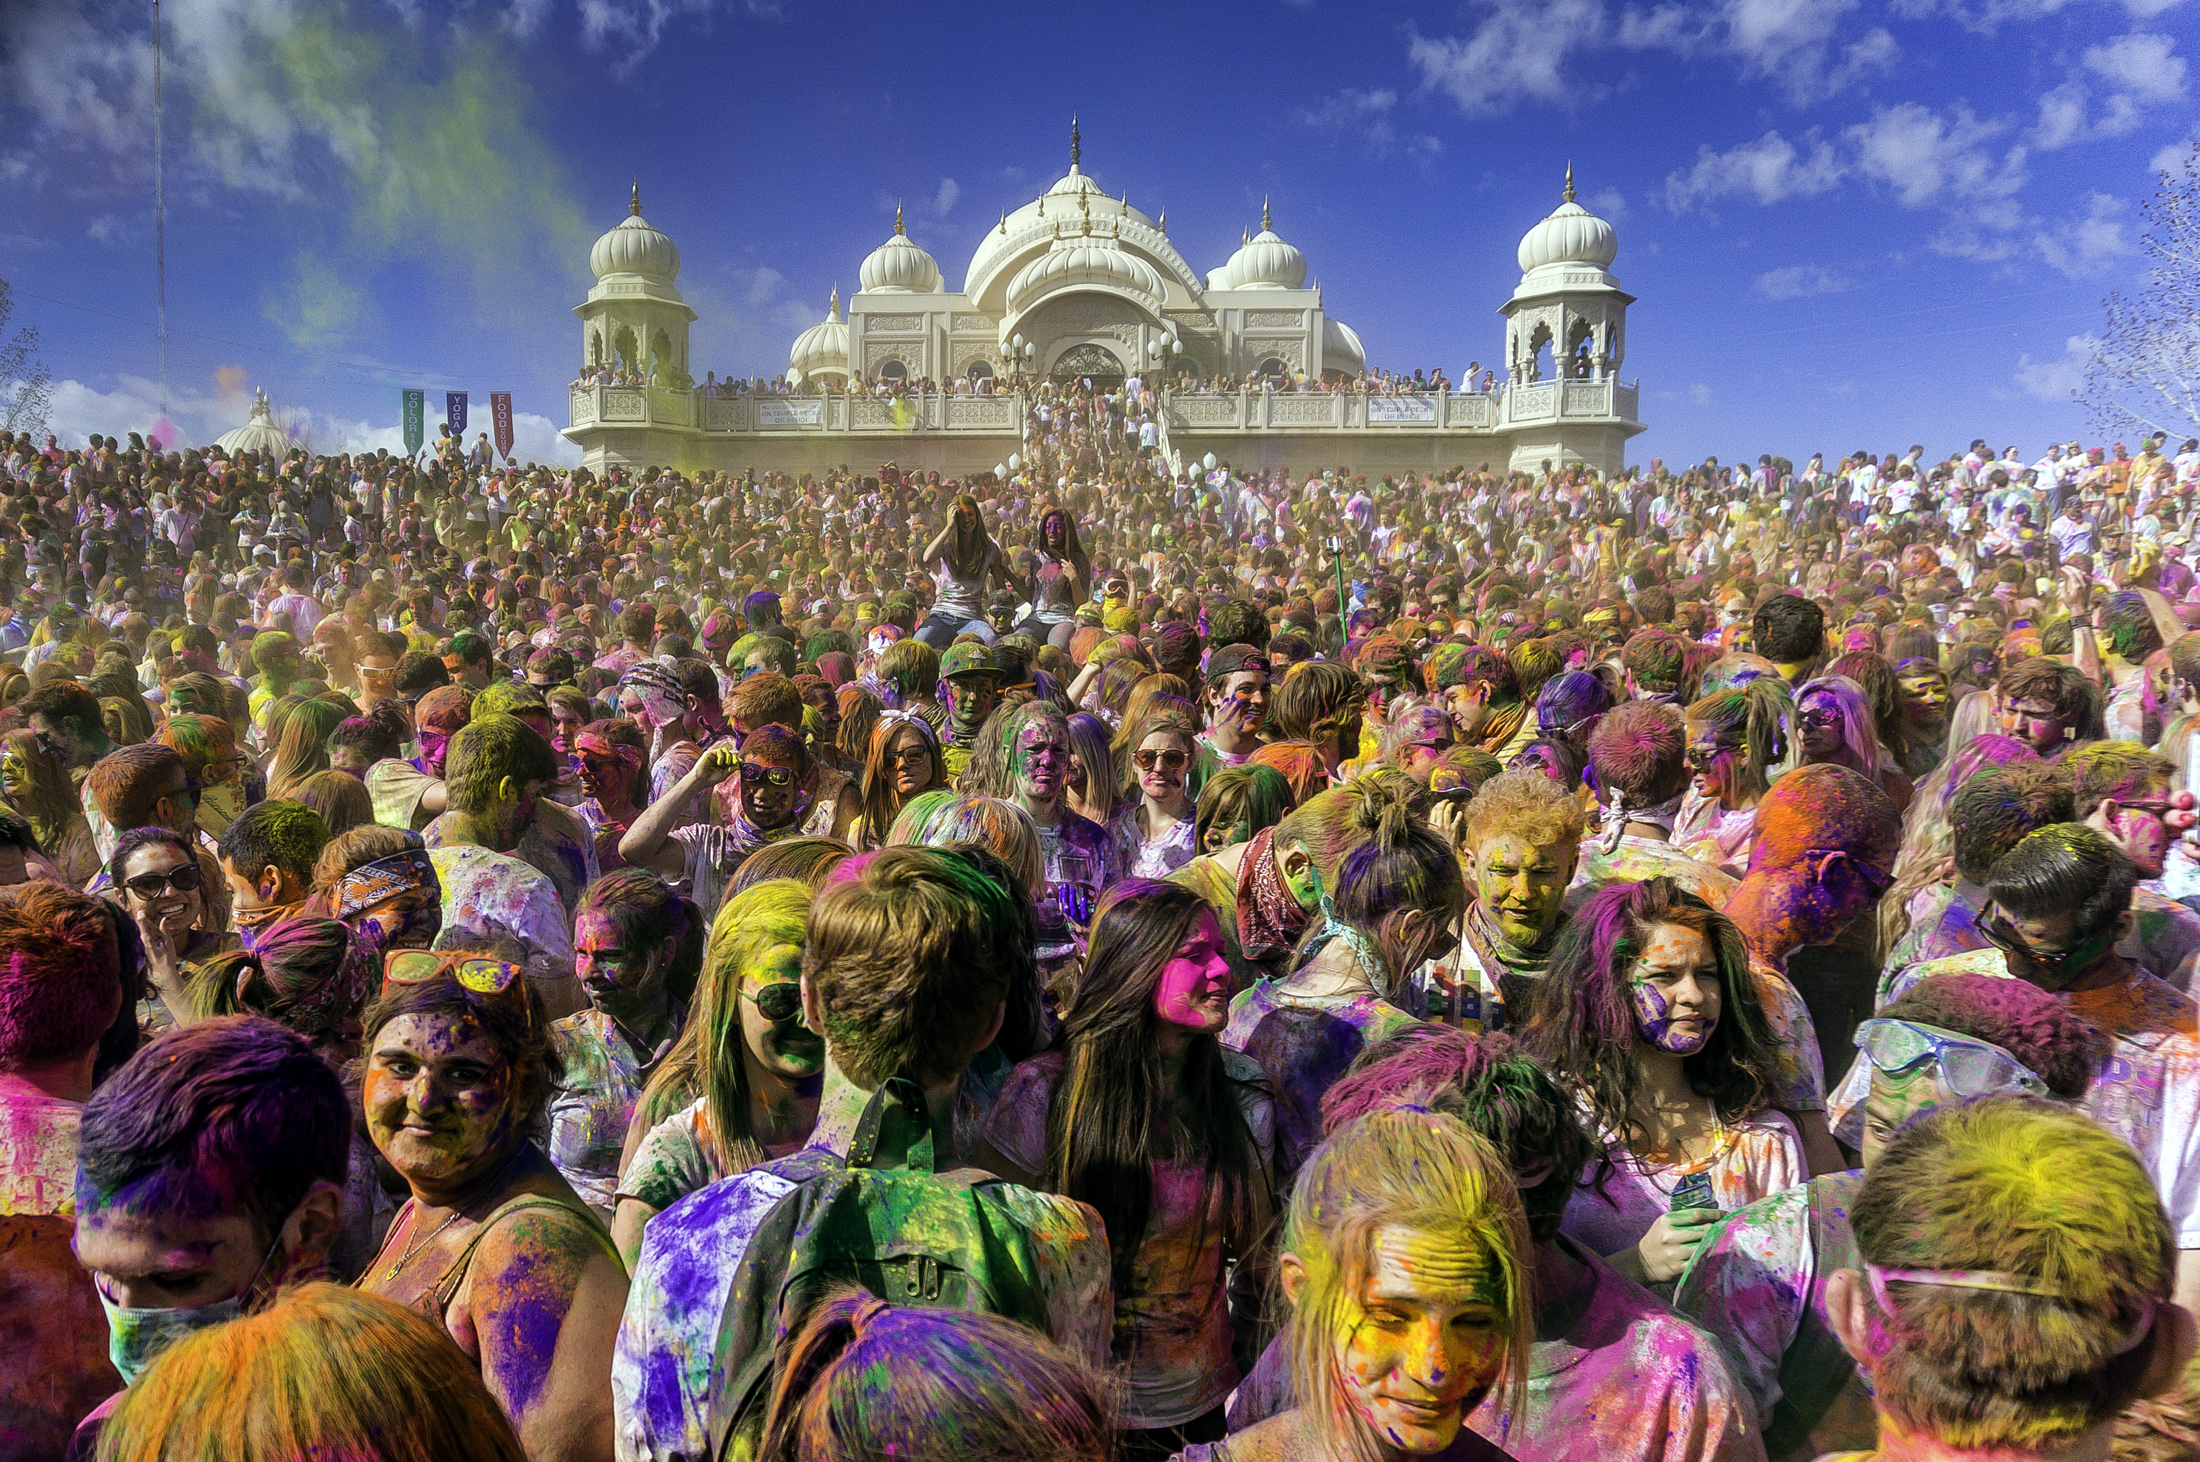 File:Holi Festival of Colors Utah, United States 2013.jpg - Wikimedia